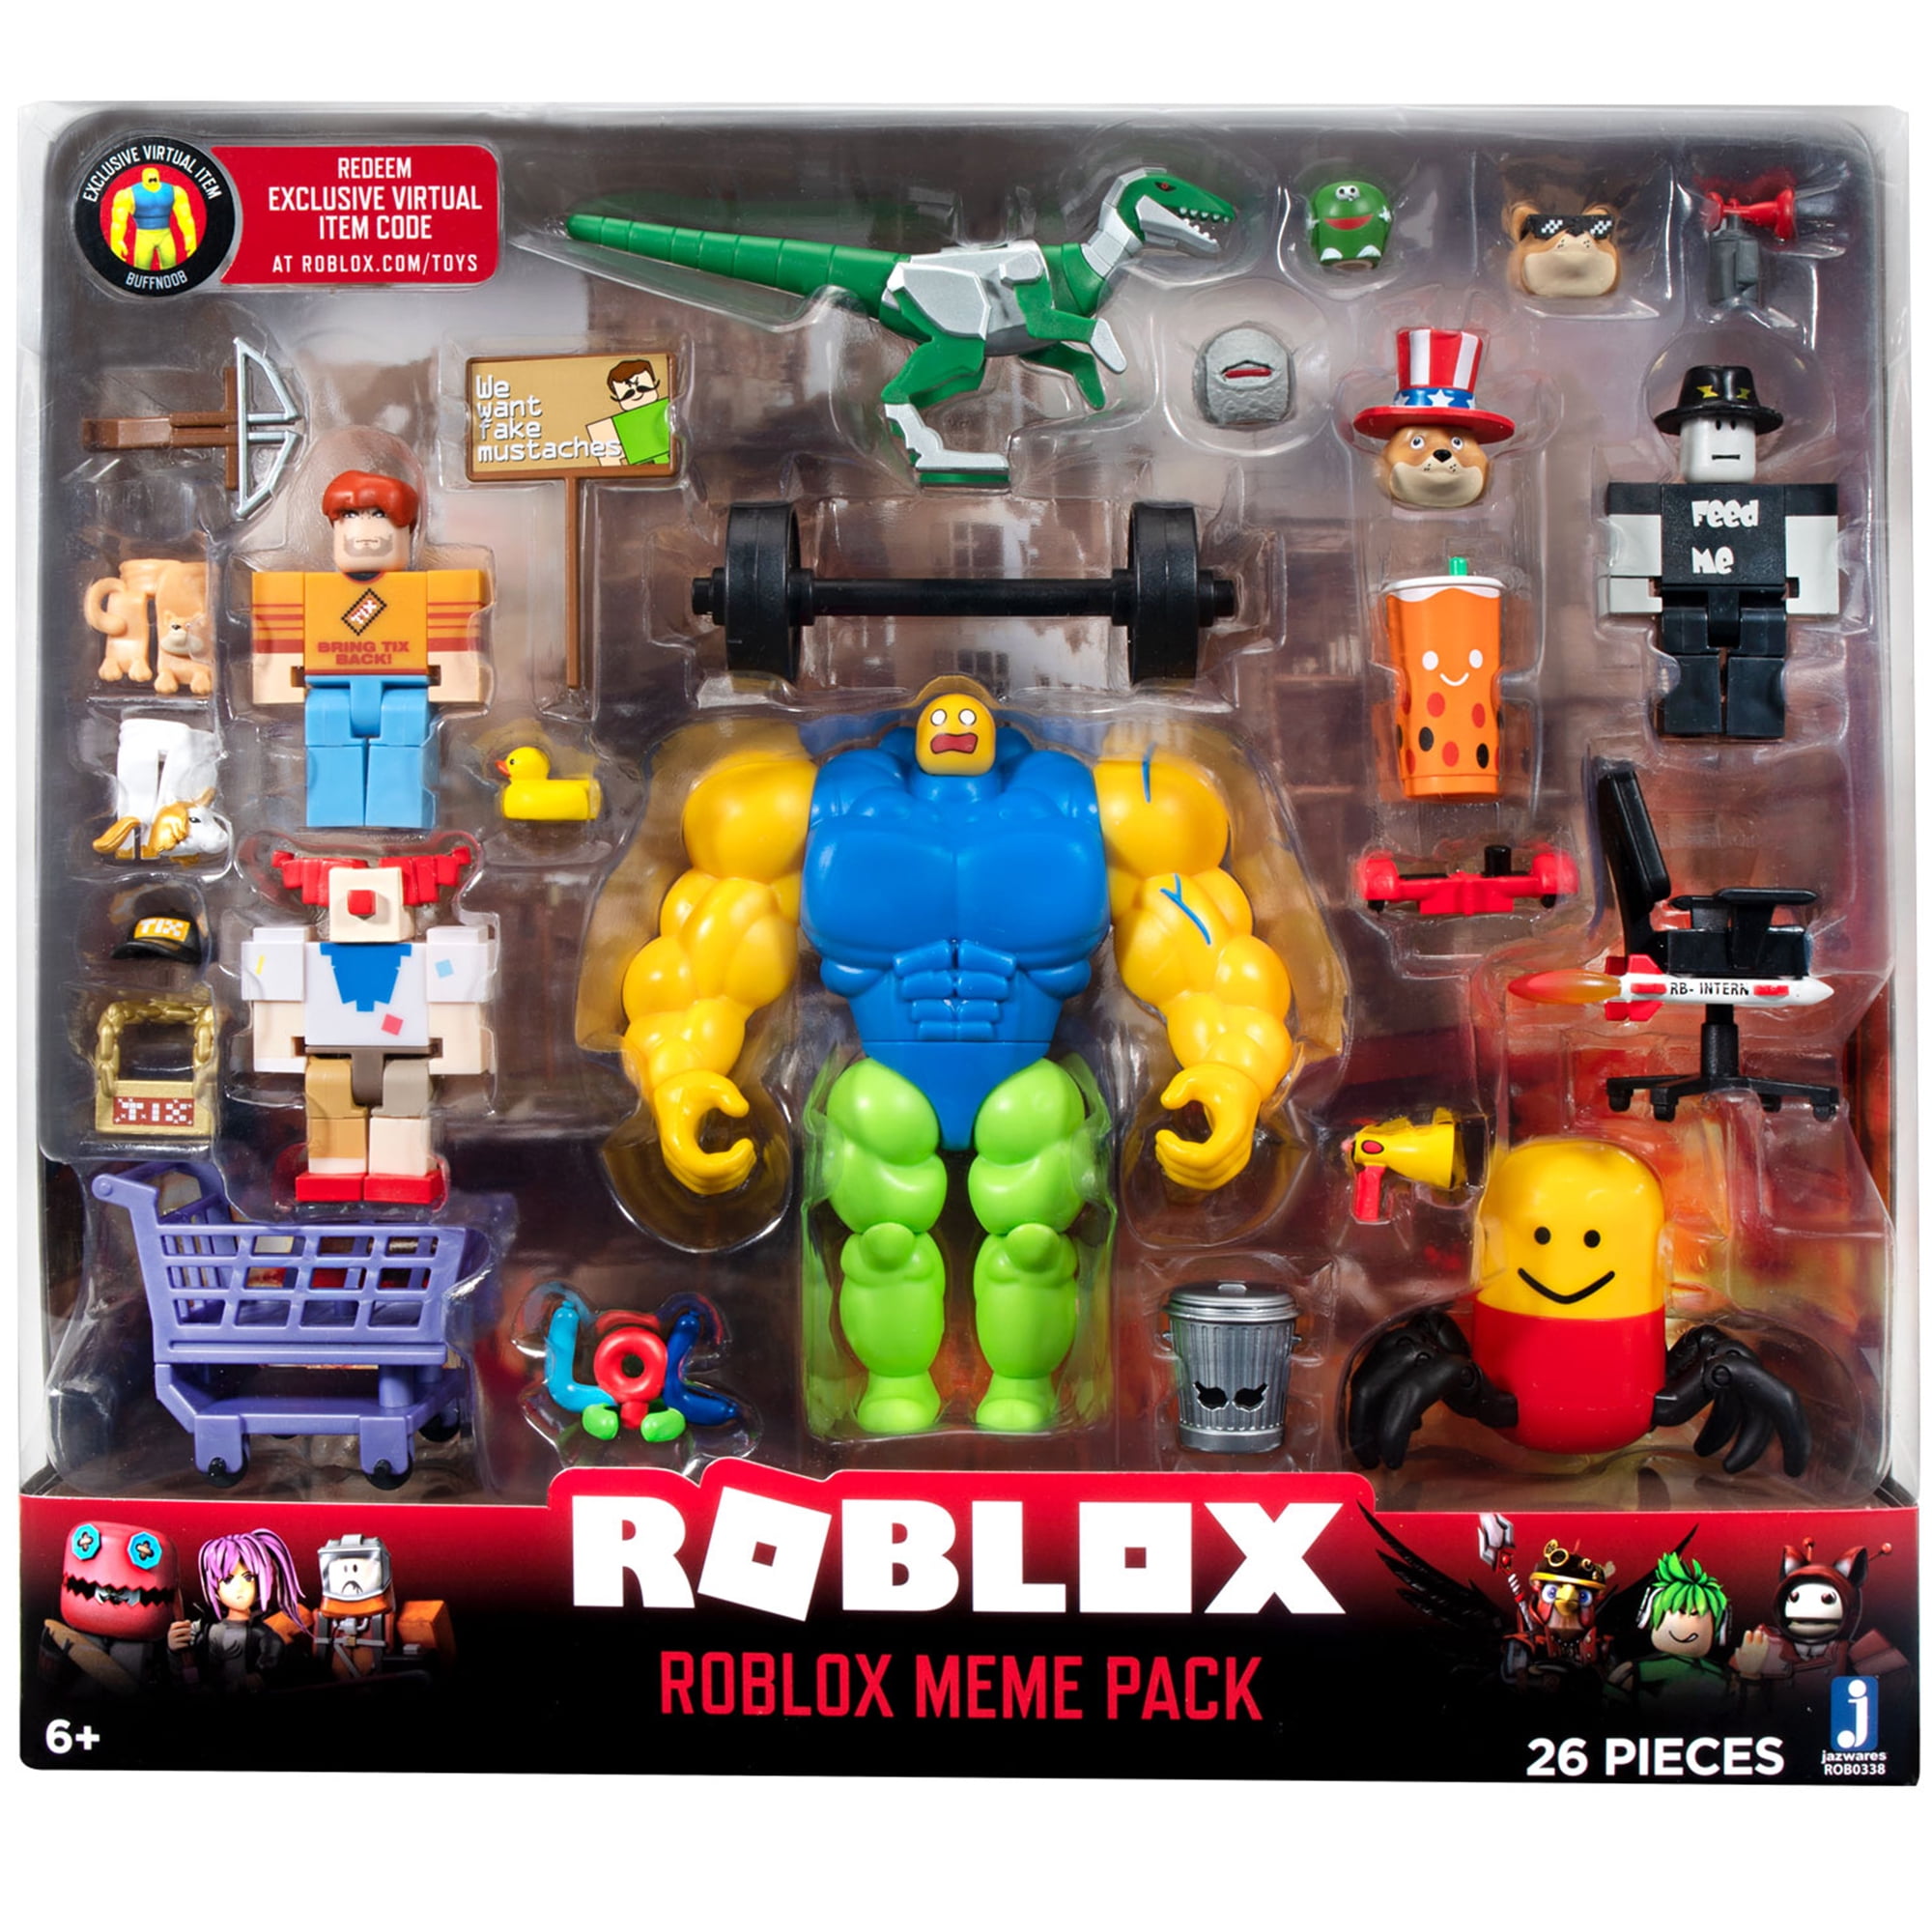 Roblox Action Collection Meme Pack Playset Includes Exclusive Virtual Item Walmart Com Walmart Com - yes roblox meme